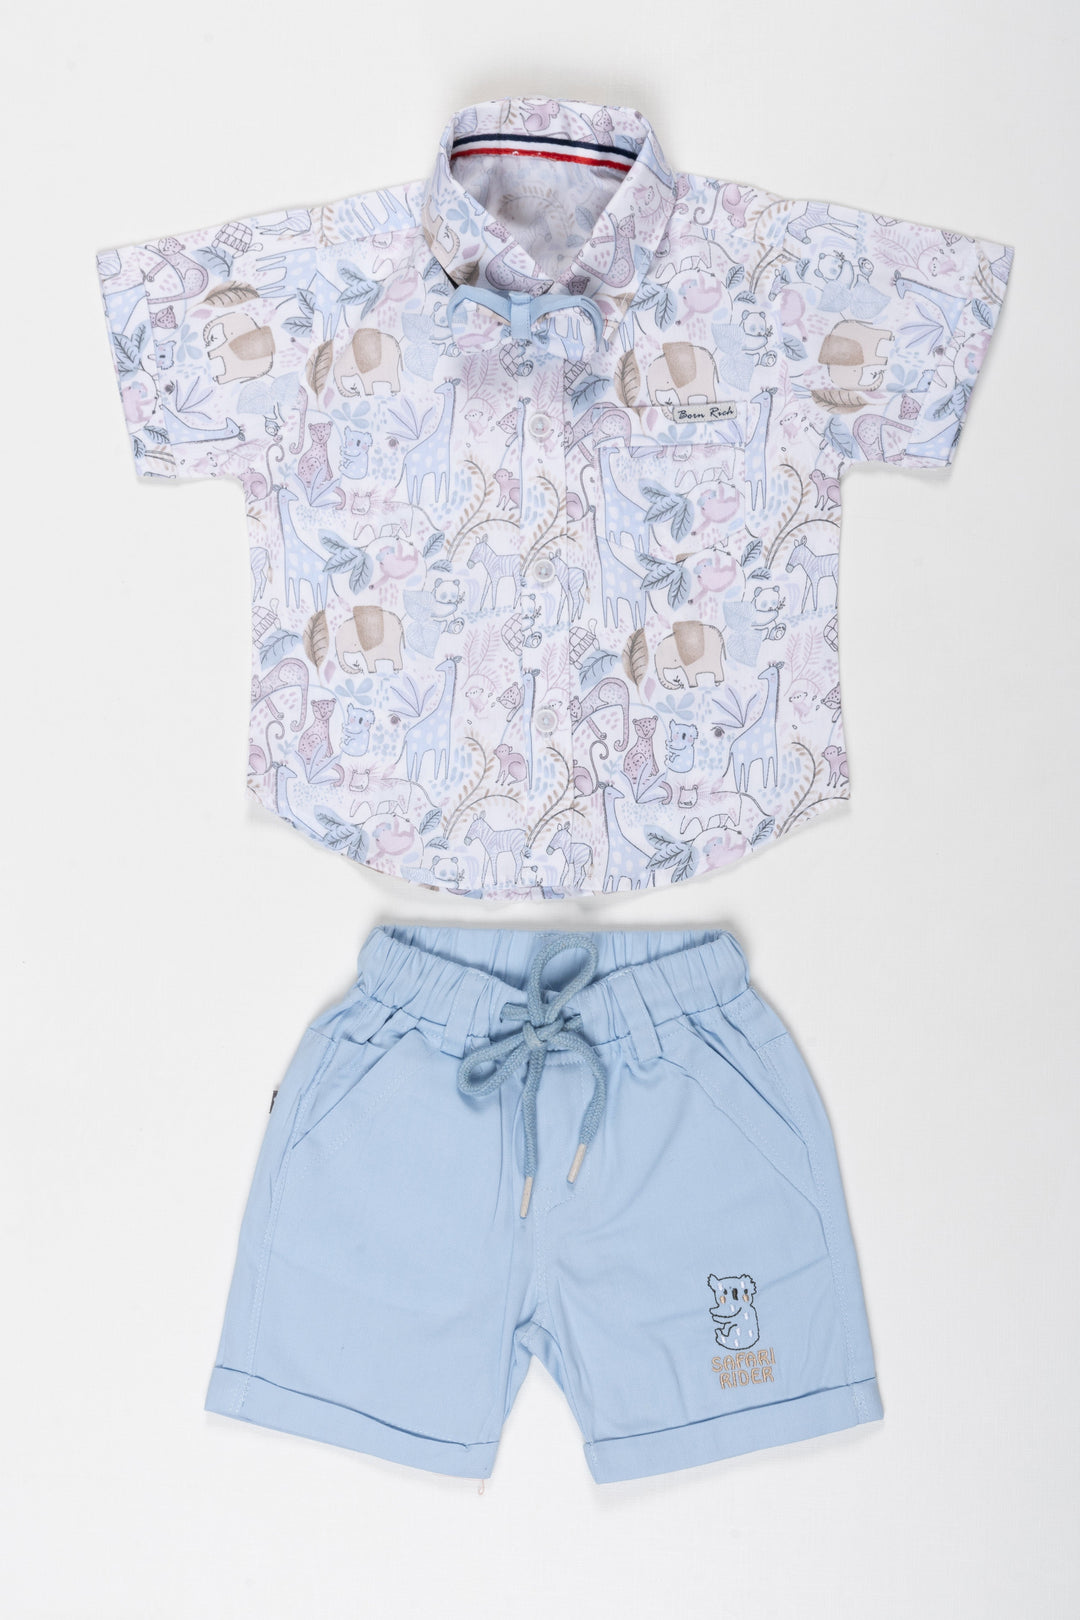 The Nesavu Boys Casual Set Safari Explorer- Boys Graphic Shirt and Shorts Set Nesavu 12 (3M) / Blue / Cotton BCS022B-12 Shop Boys Shirt and Shorts Set Online | Trendy Kids Summer Outfits | The Nesavu